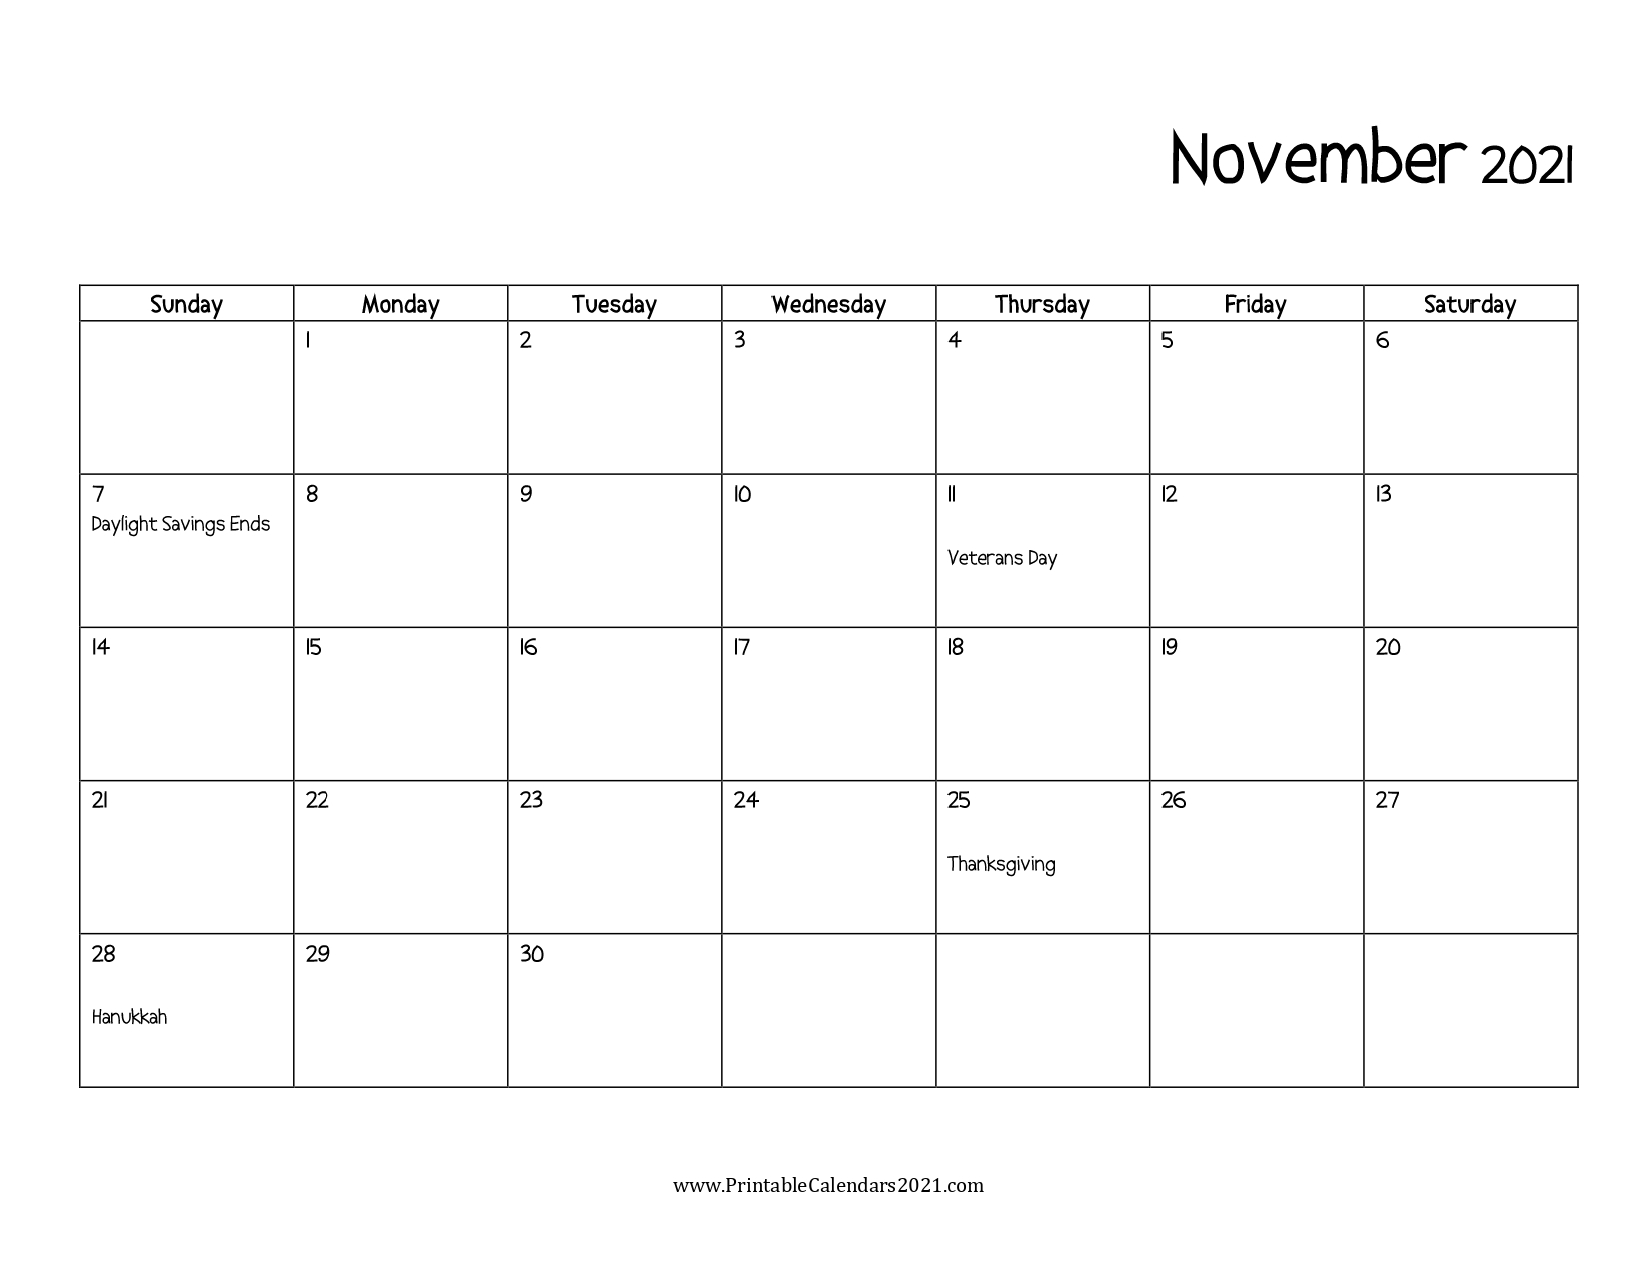 Catch Wiki Calendar November 2022